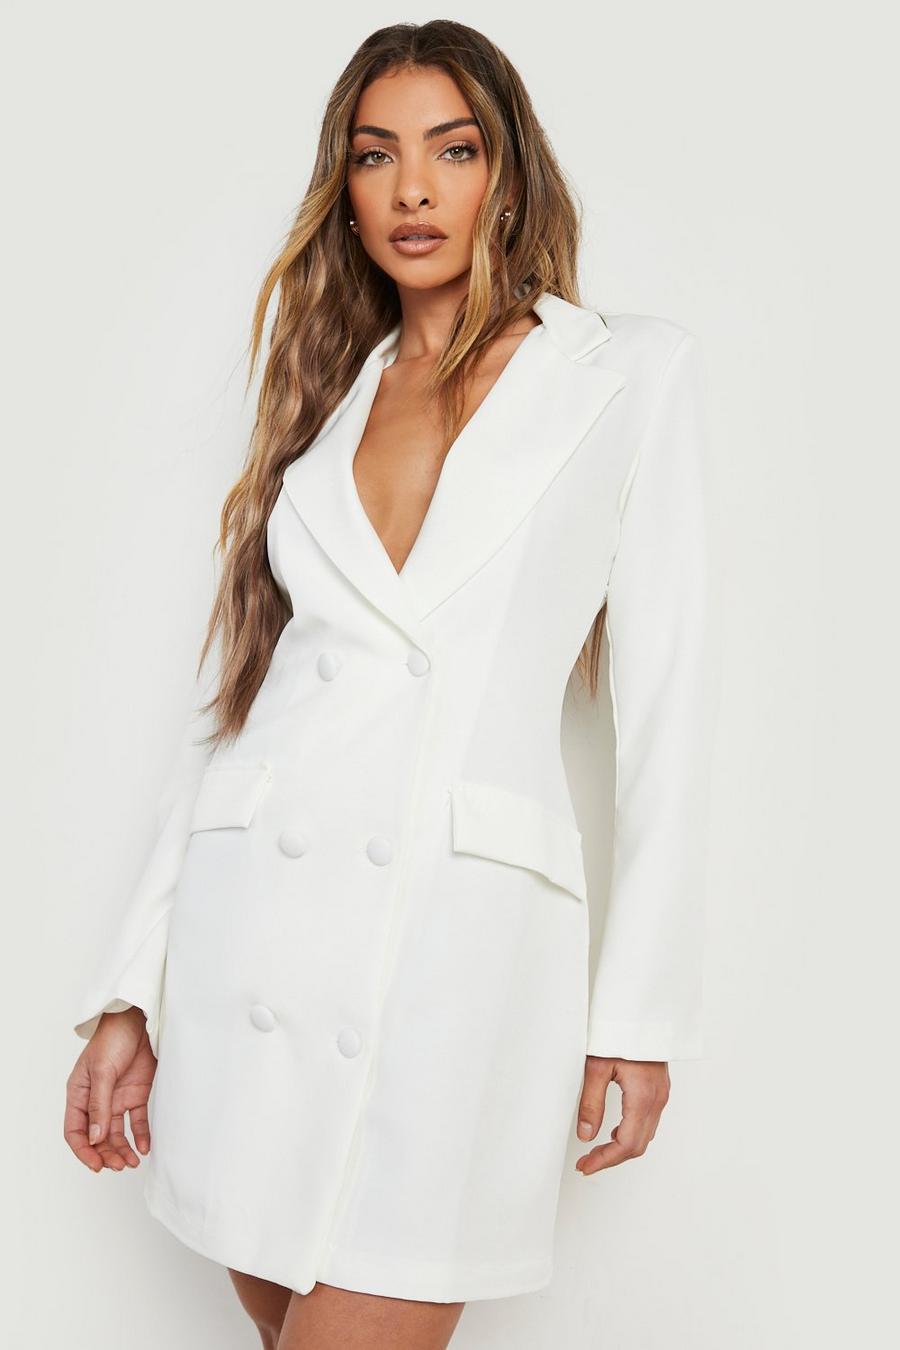 Ivory white Flared Sleeve Tailored Blazer Dress